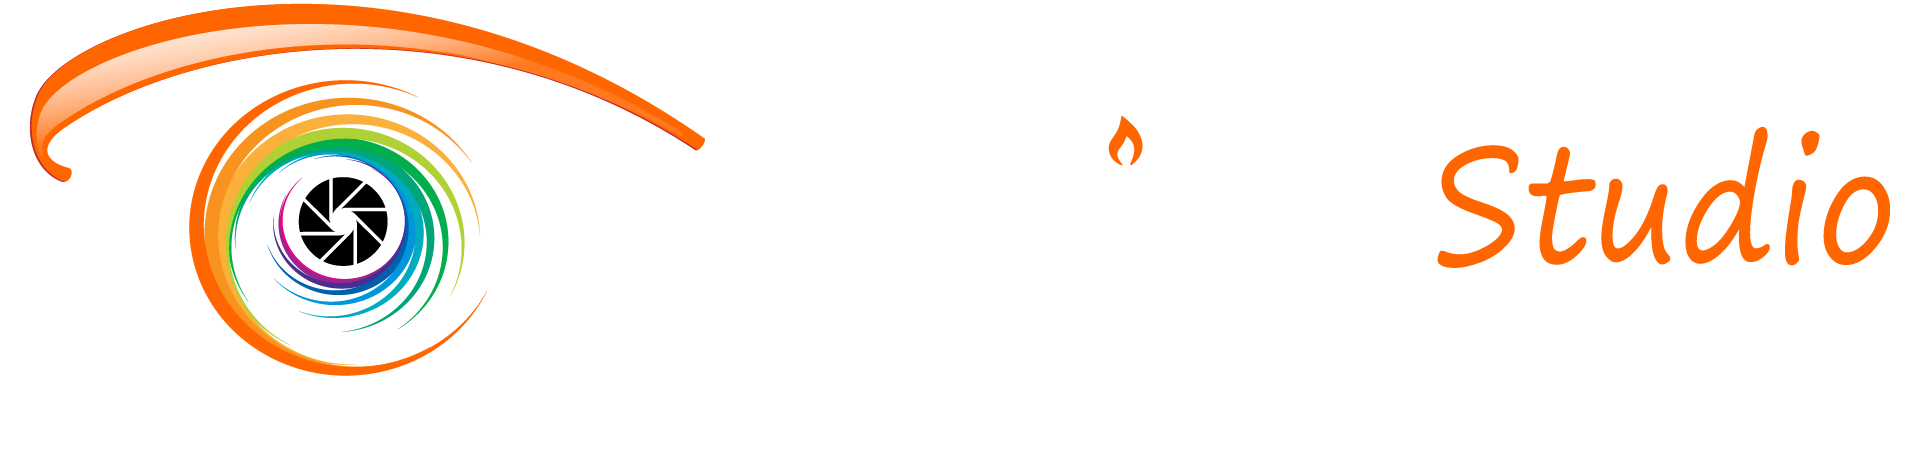 CandleLight Studio's logo showcases their elegant wedding photography services